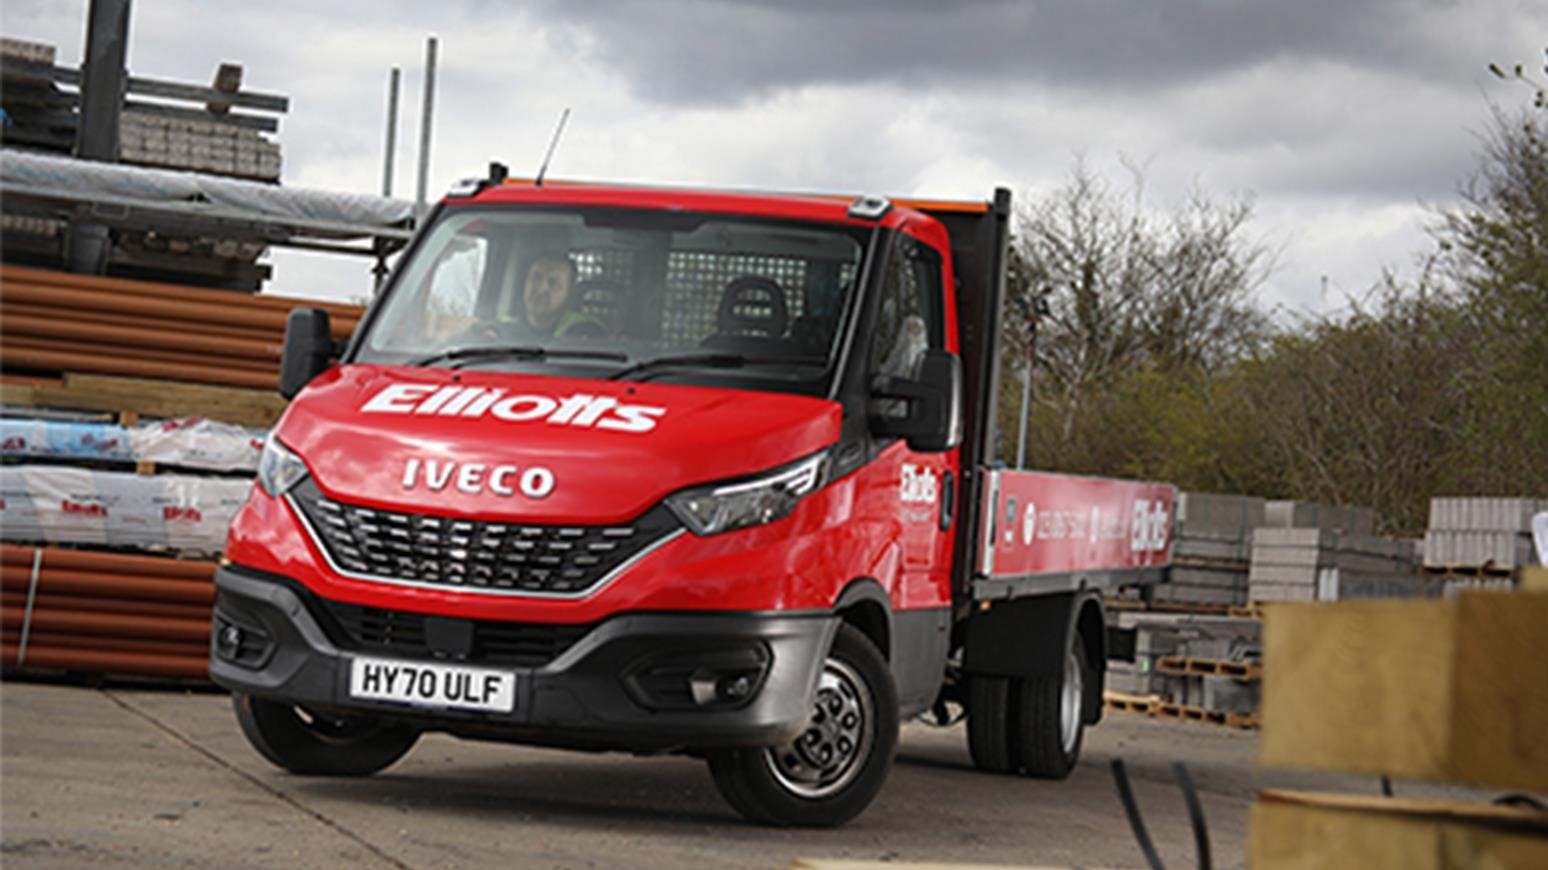 Elliotts Fleet Now 100% IVECO With New 3.5-Tonne Daily Trucks